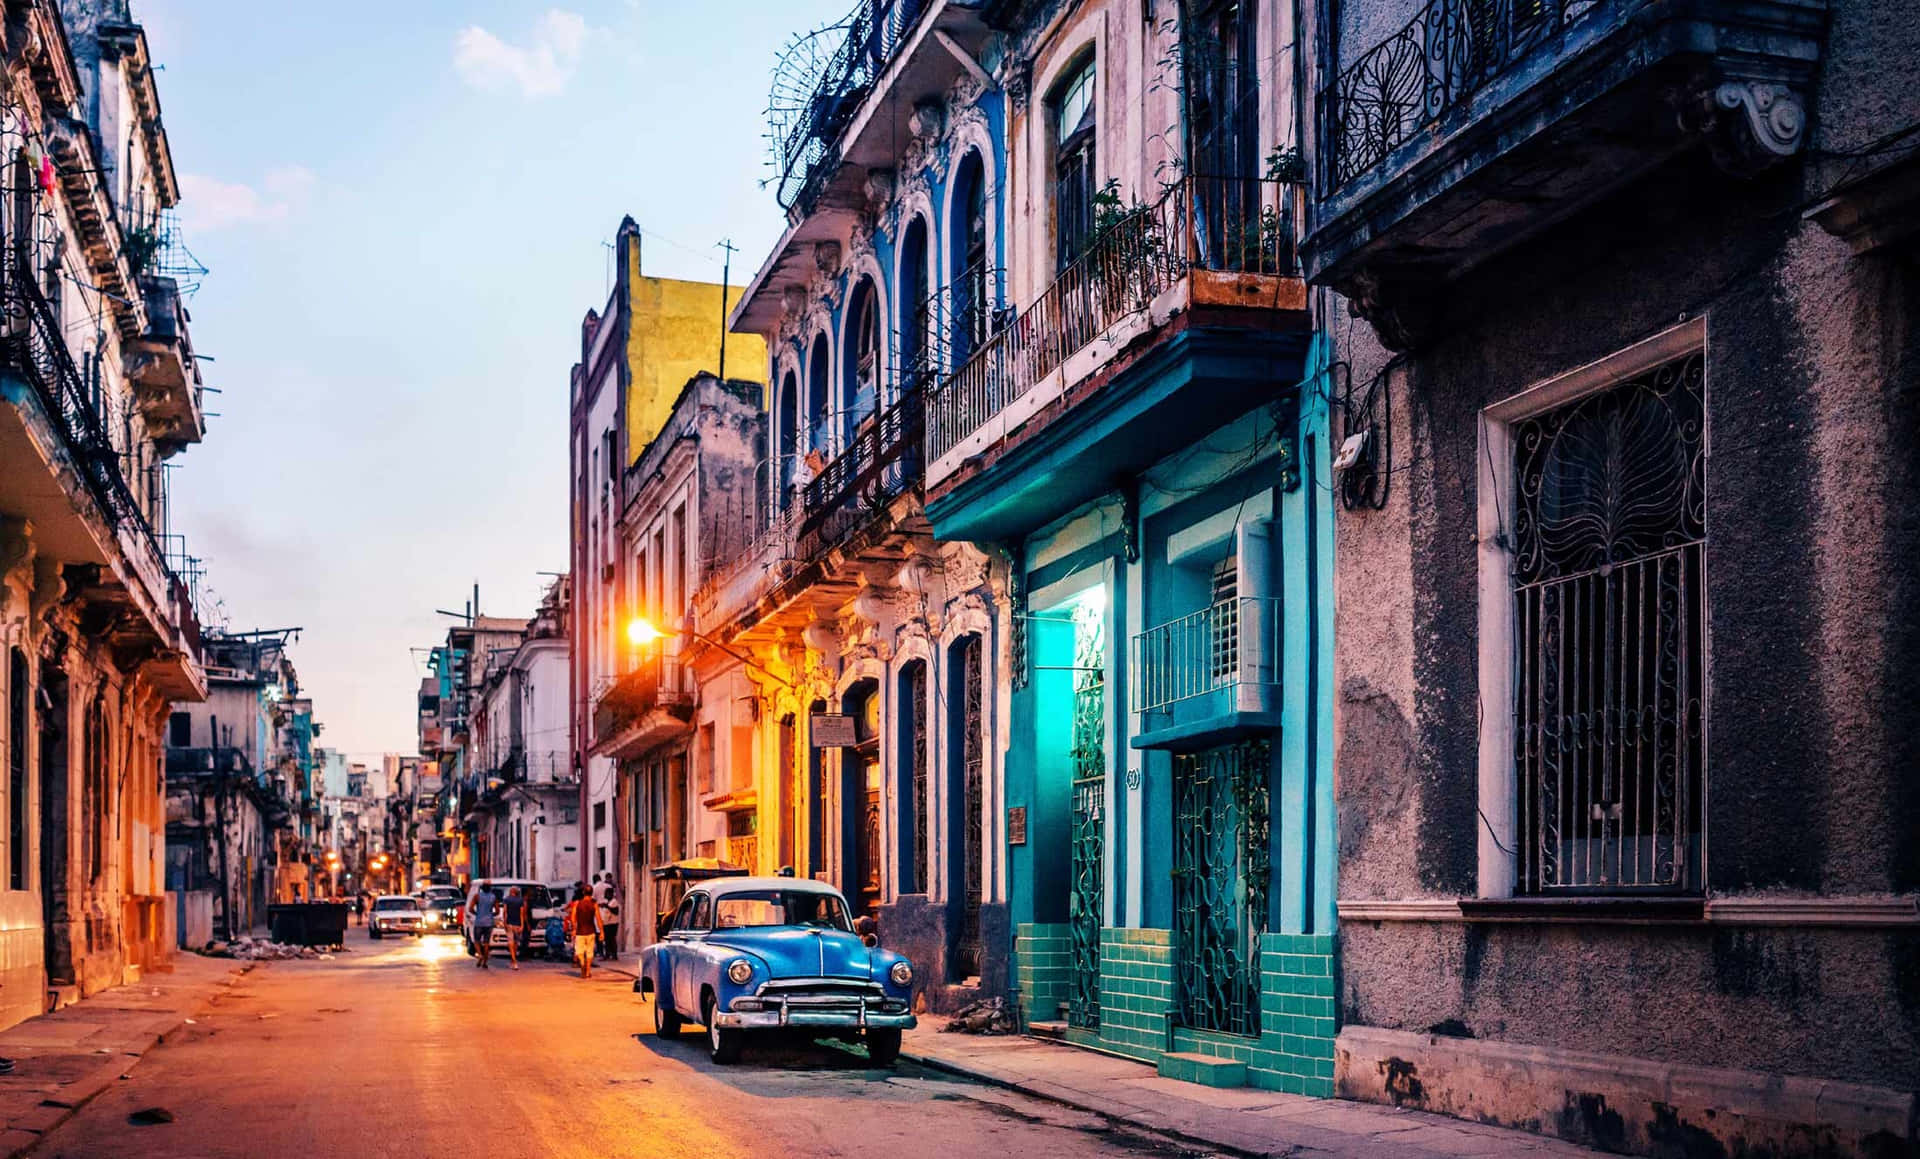 “Exploring the Historic Streets of Cuba”